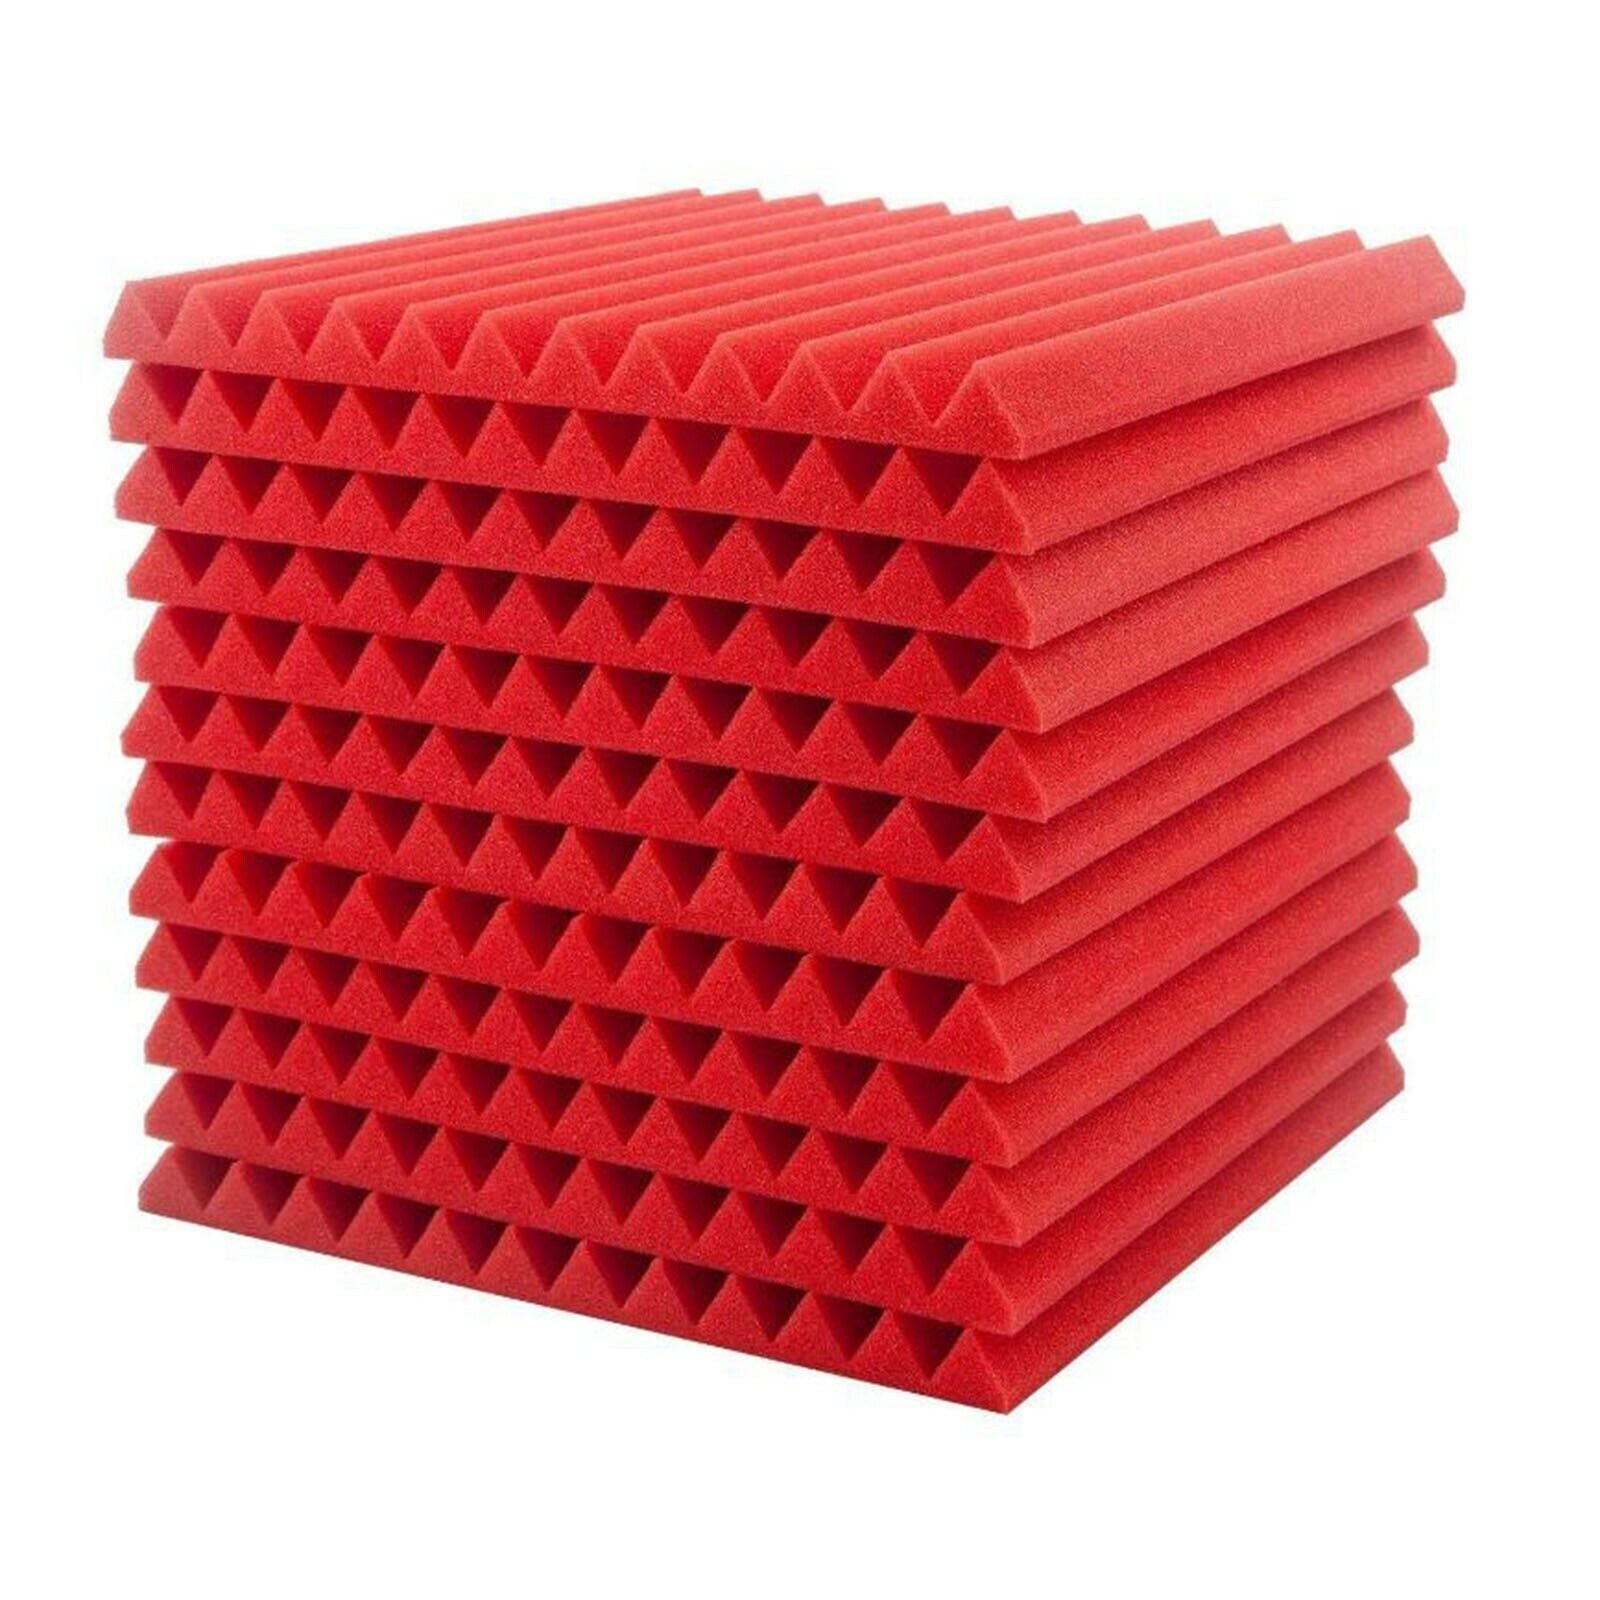 48 Pack Acoustic Foam Panels, 30x 30x 2.5cm Studio Soundproofing Wedges Fire Resistant Sound Proof Padding Acoustic Treatment Foam (Red) - Office Catch